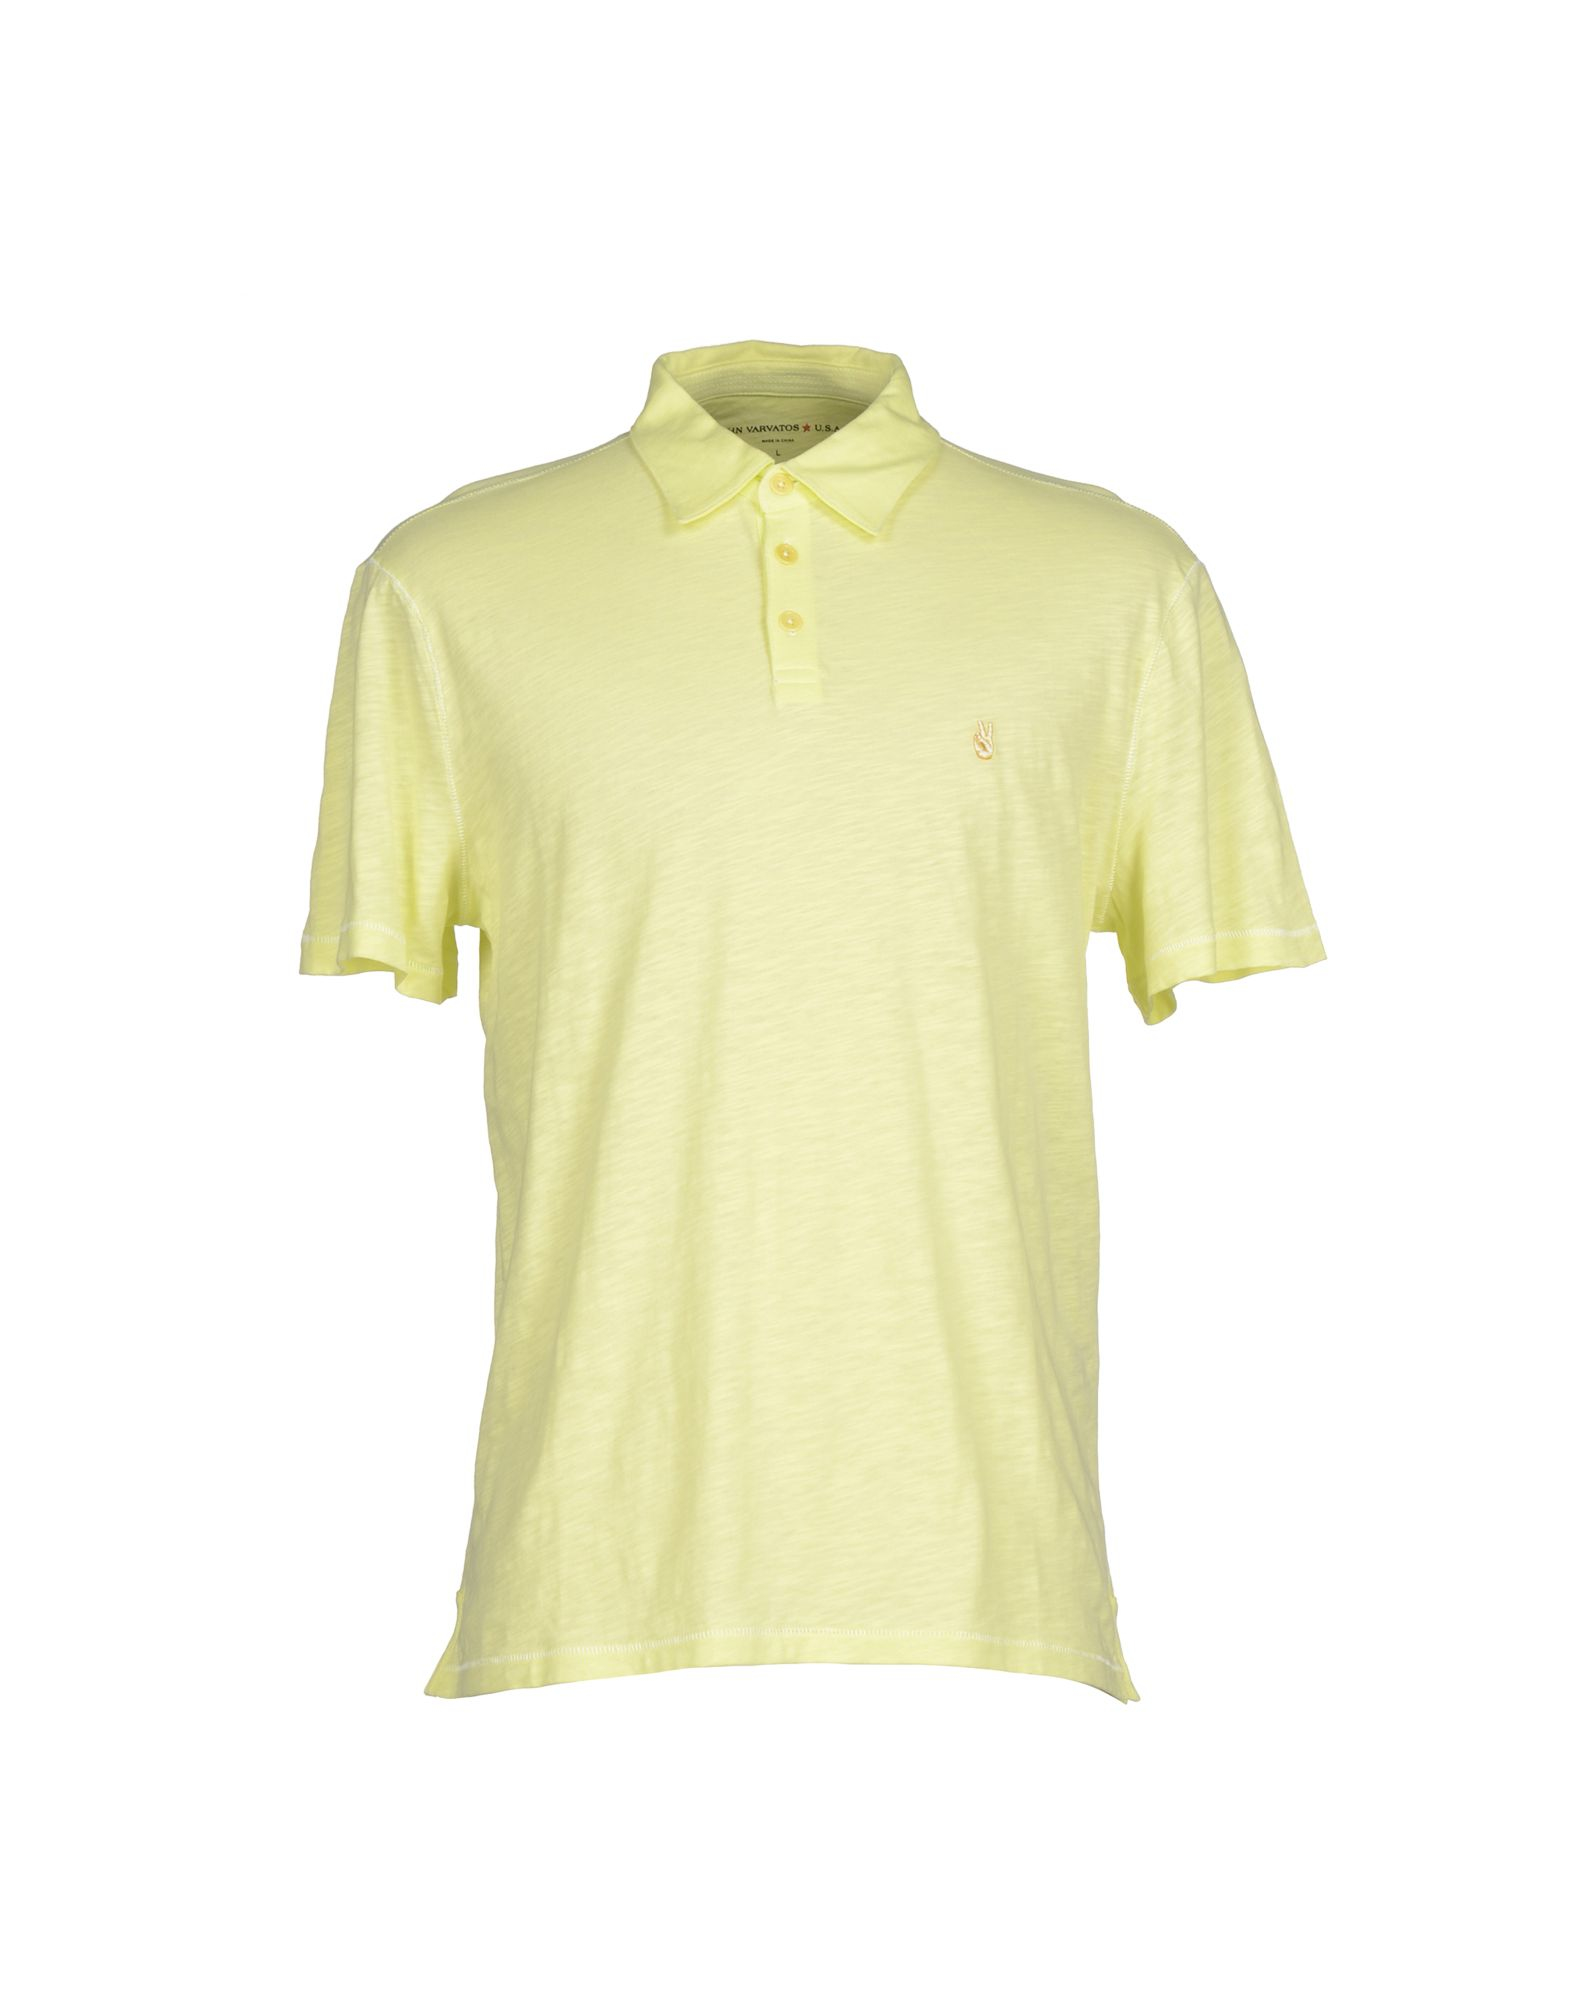 John Varvatos Cotton Polo Shirt in Light Yellow (Yellow) for Men - Lyst